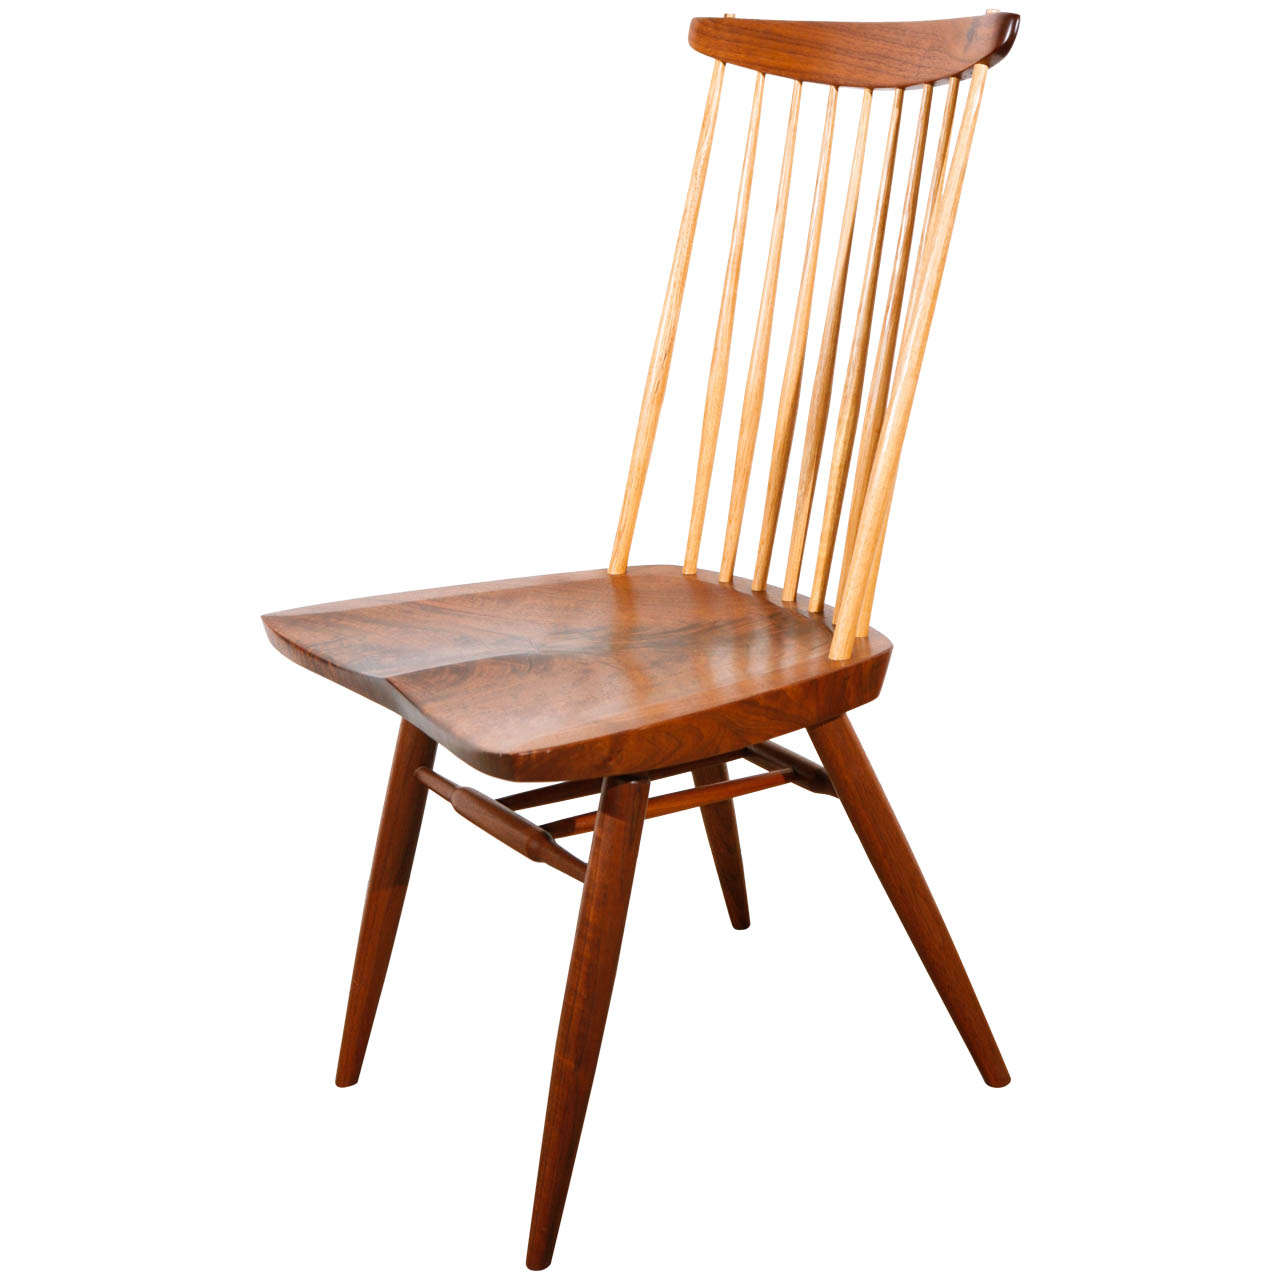 George Nakashima 'New Chair'